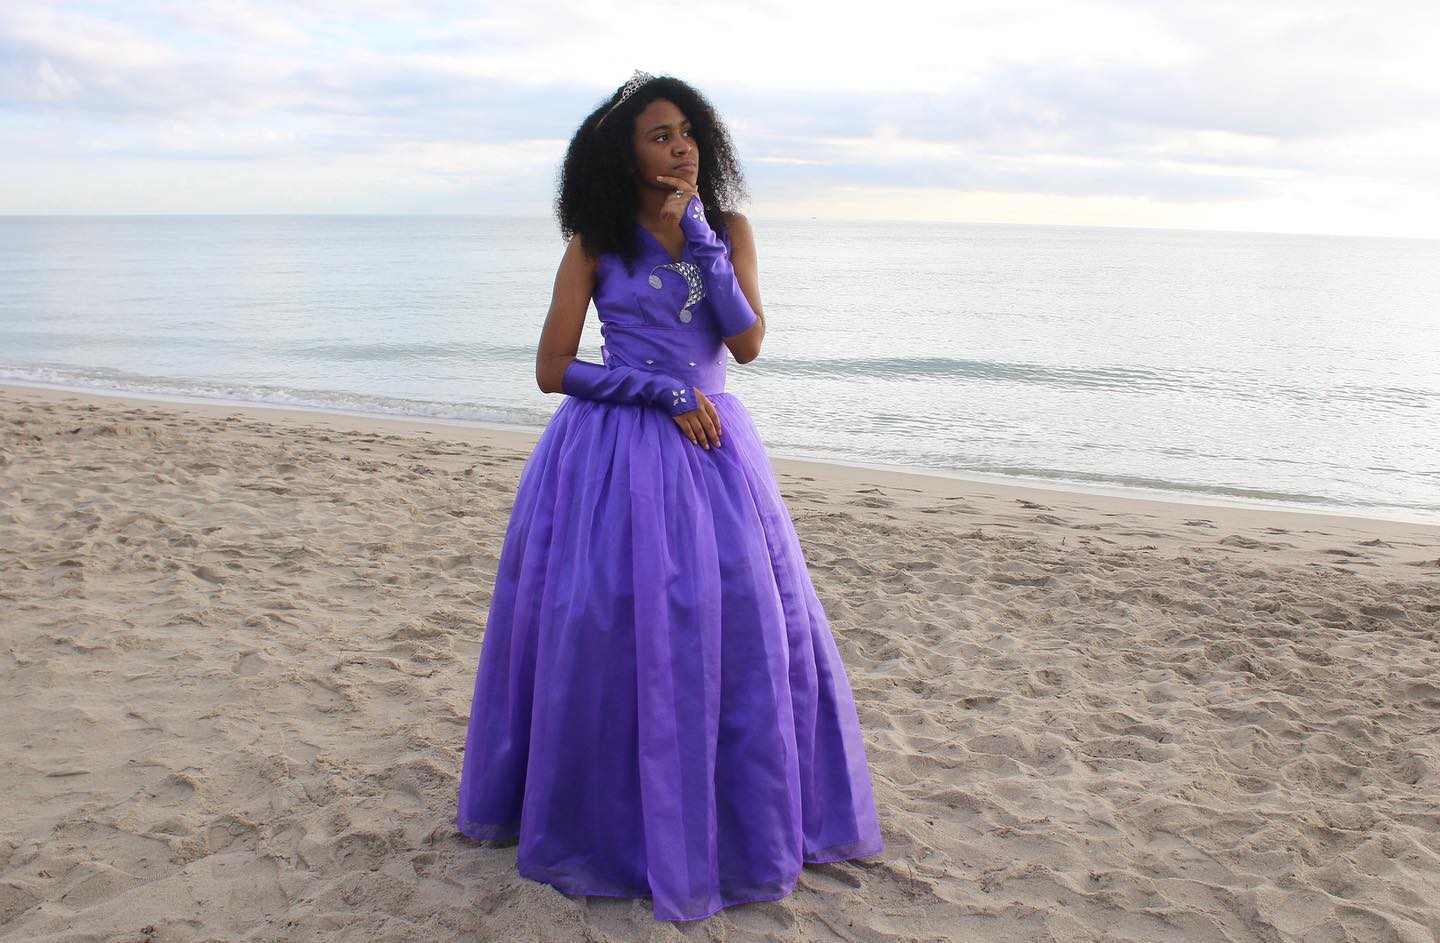 Heily Rivas stands on a beach wearing a purple Quinceañera dress. Photo: Harol Rivas